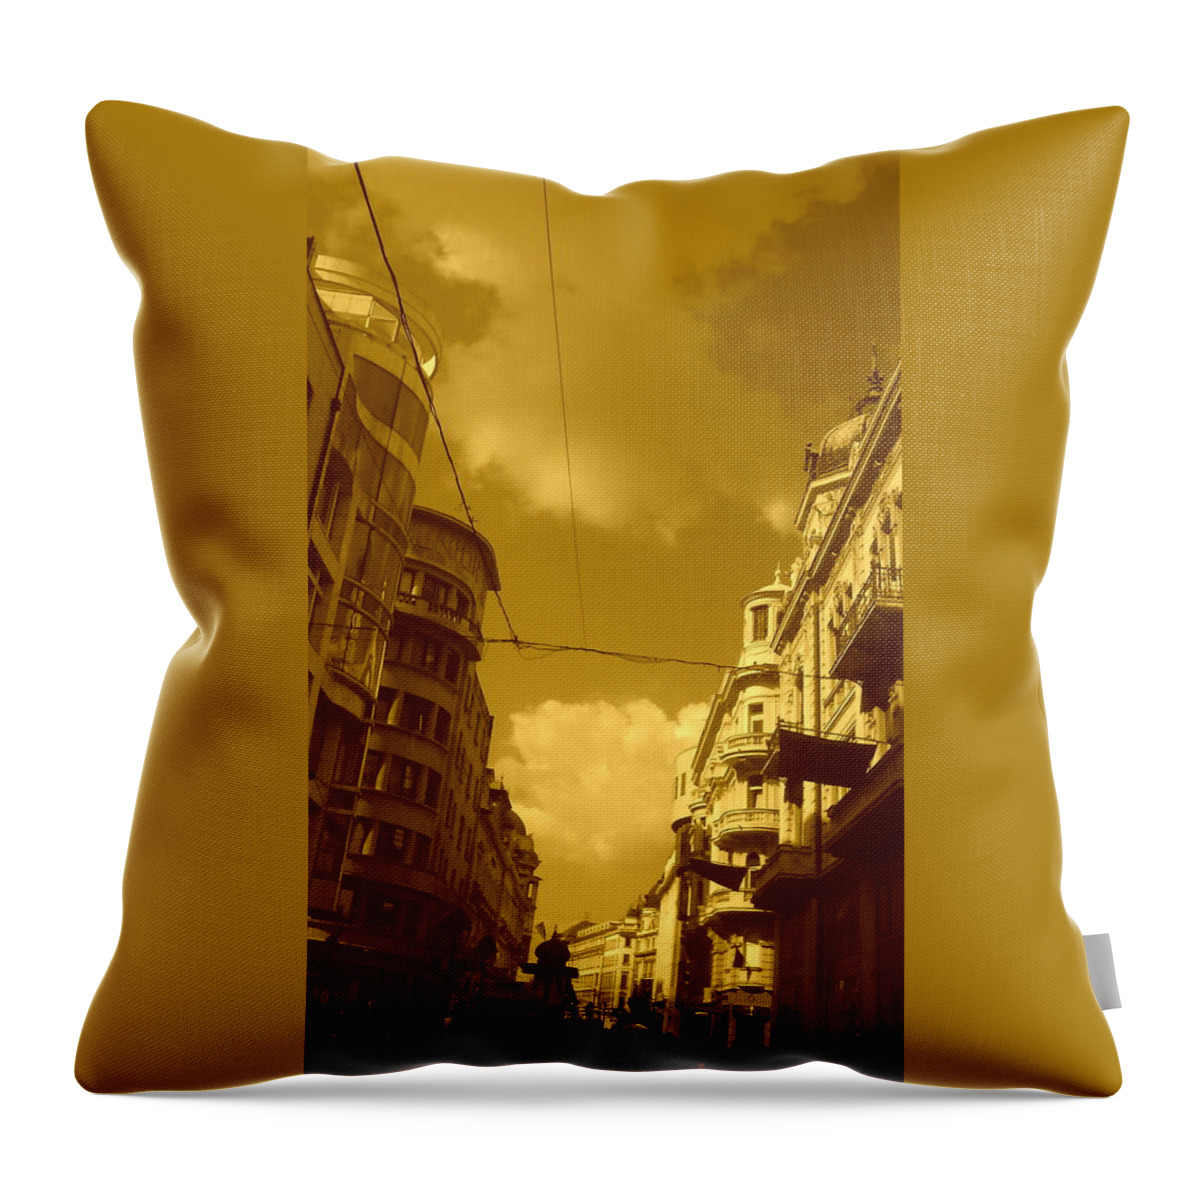 Belgrade Throw Pillow featuring the photograph Central Belgrade street by Anamarija Marinovic